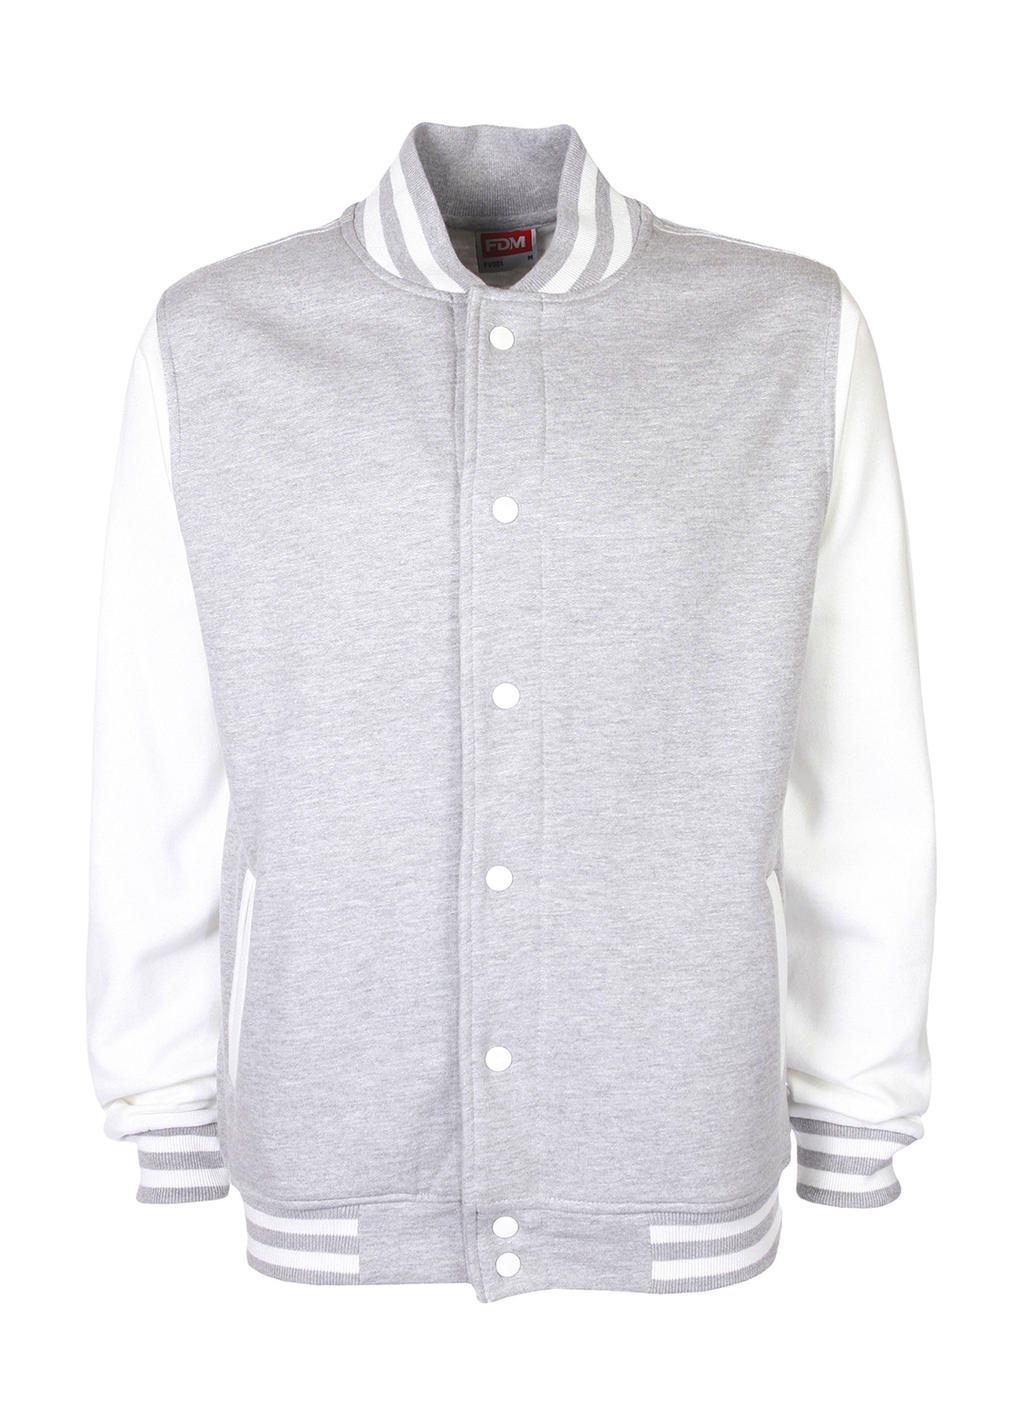  Varsity Jacket in Farbe Sport Grey/White